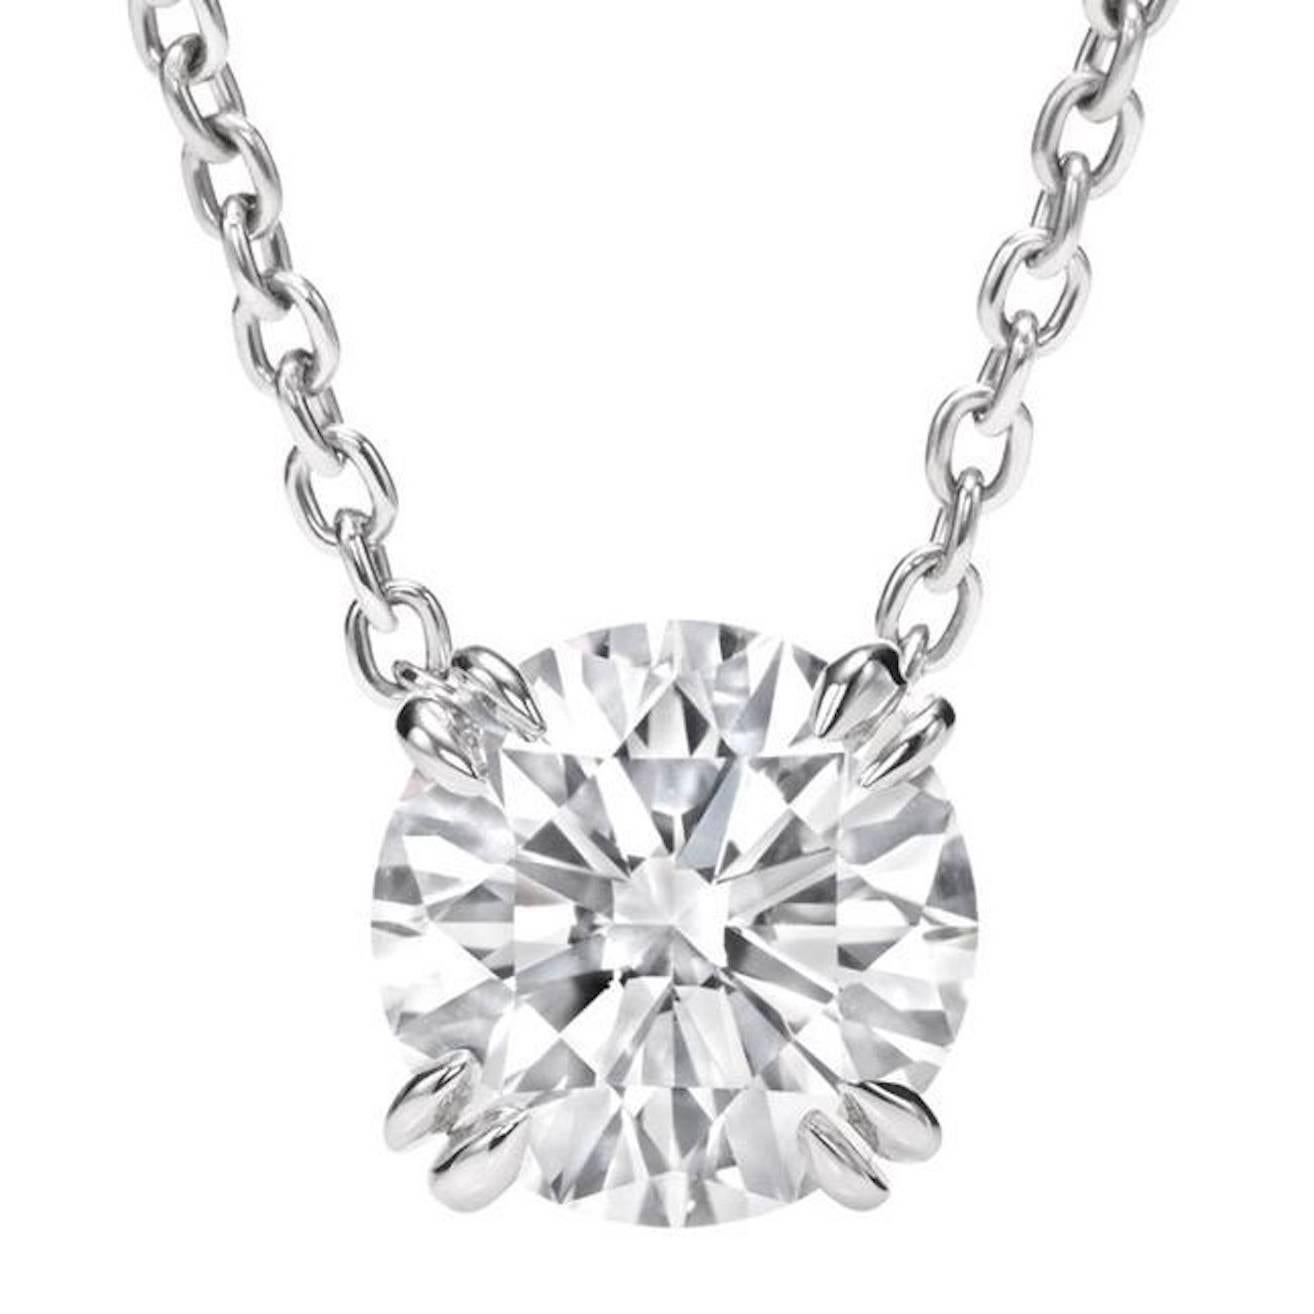 2.01 Carat Round Diamond D Internally Flawless Platinum Pendant Necklace For Sale